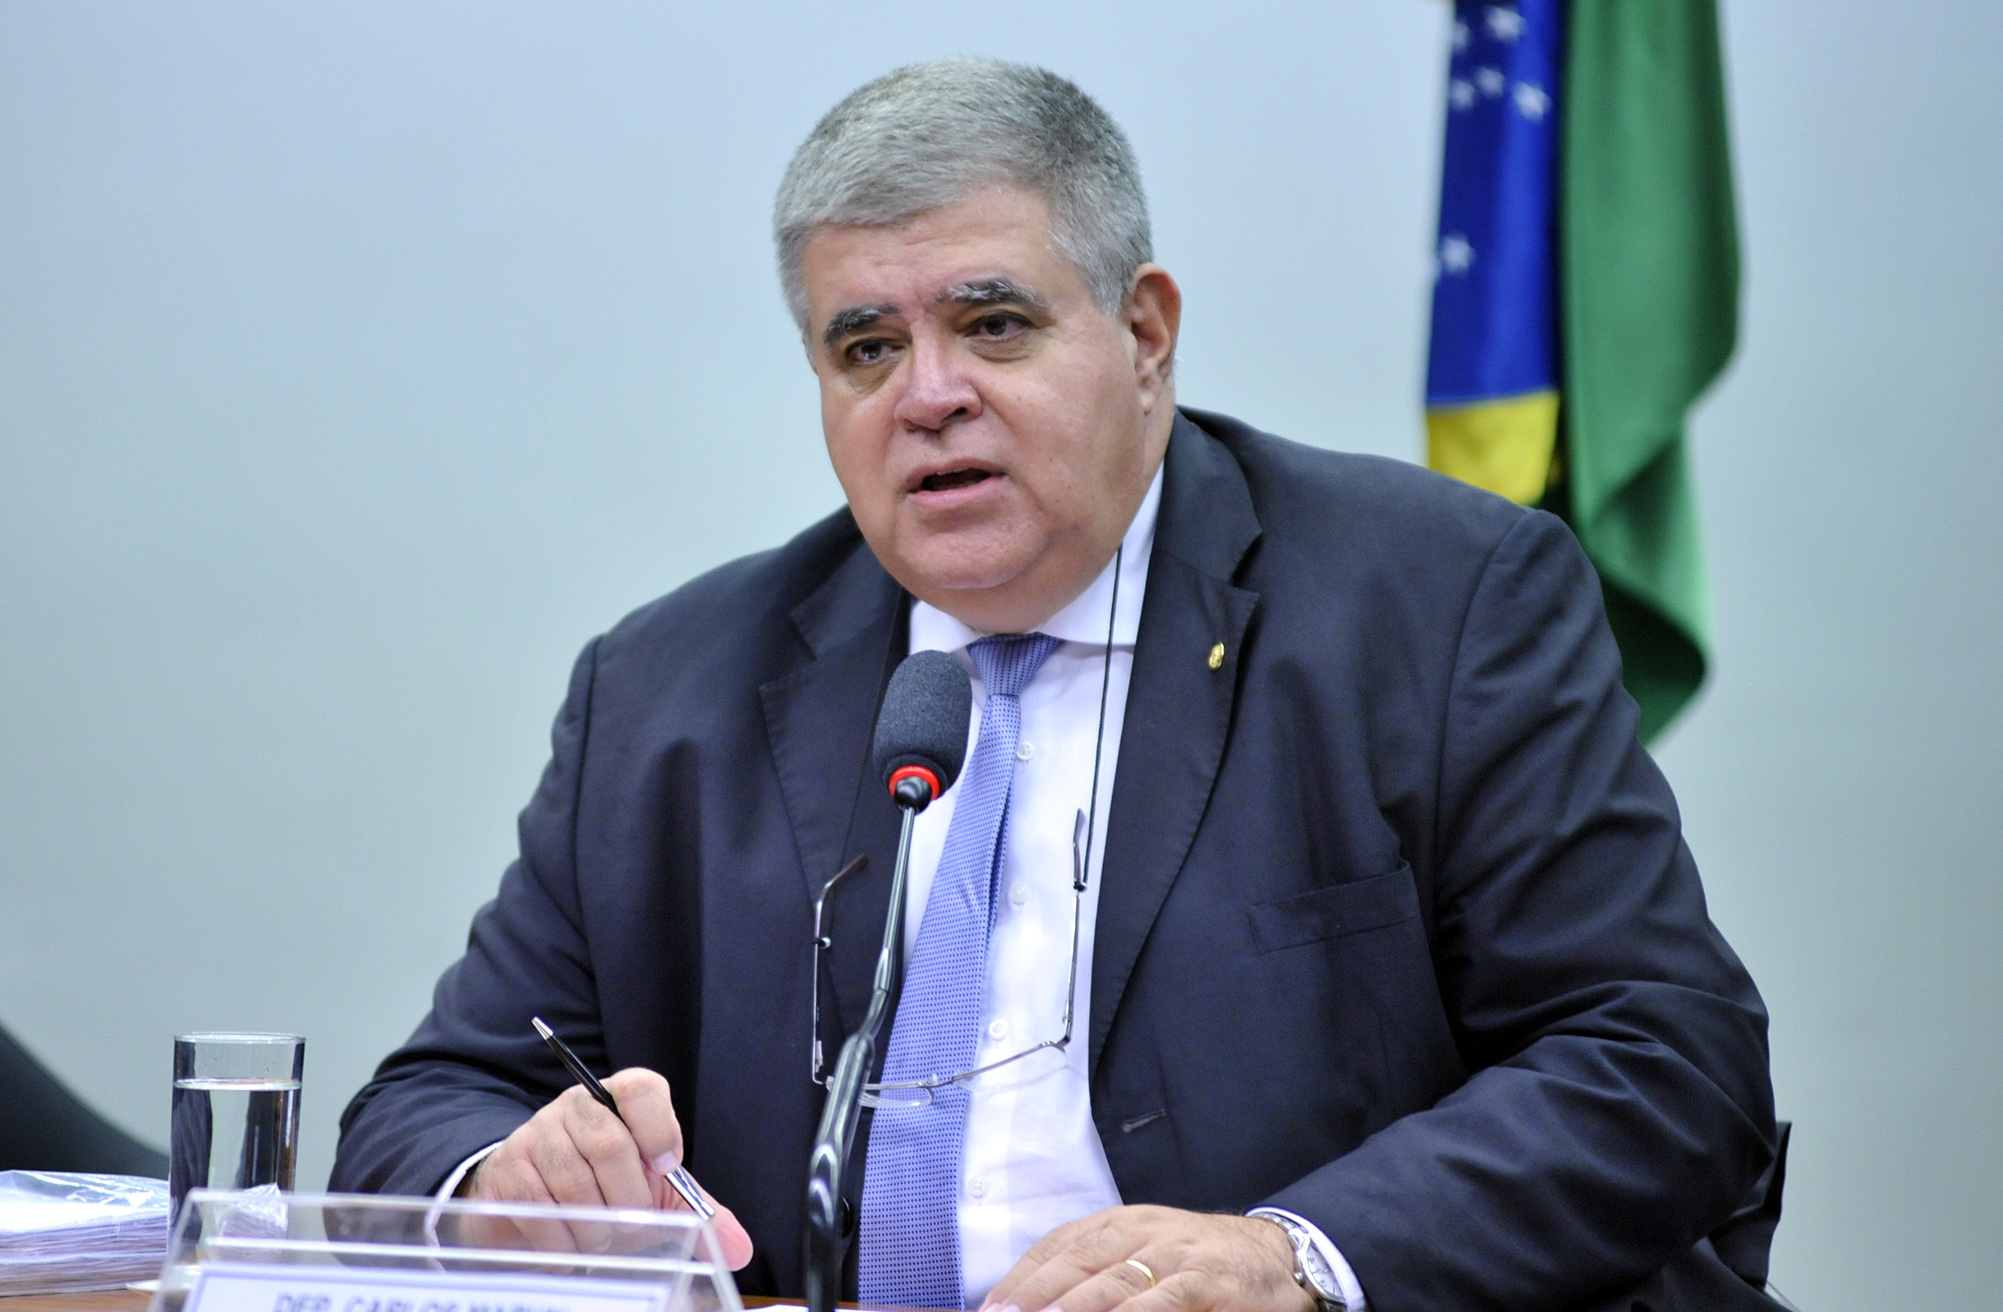 Deputado Carlos Marun (PMDB-MS).